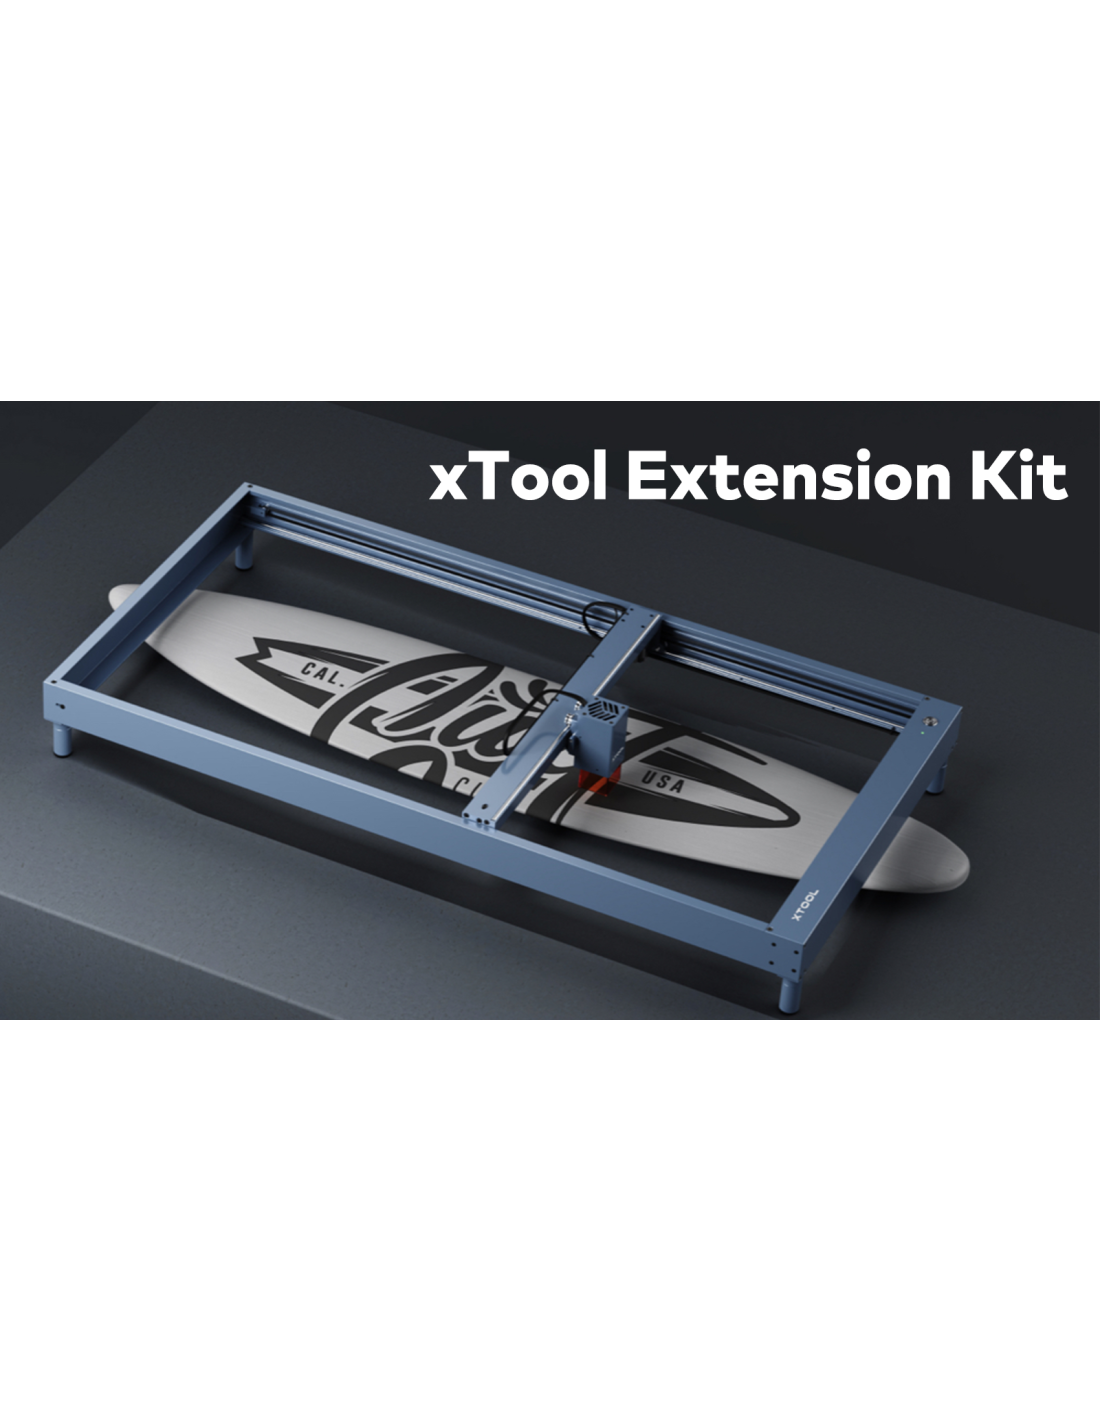 Kit de extensión xTool D1